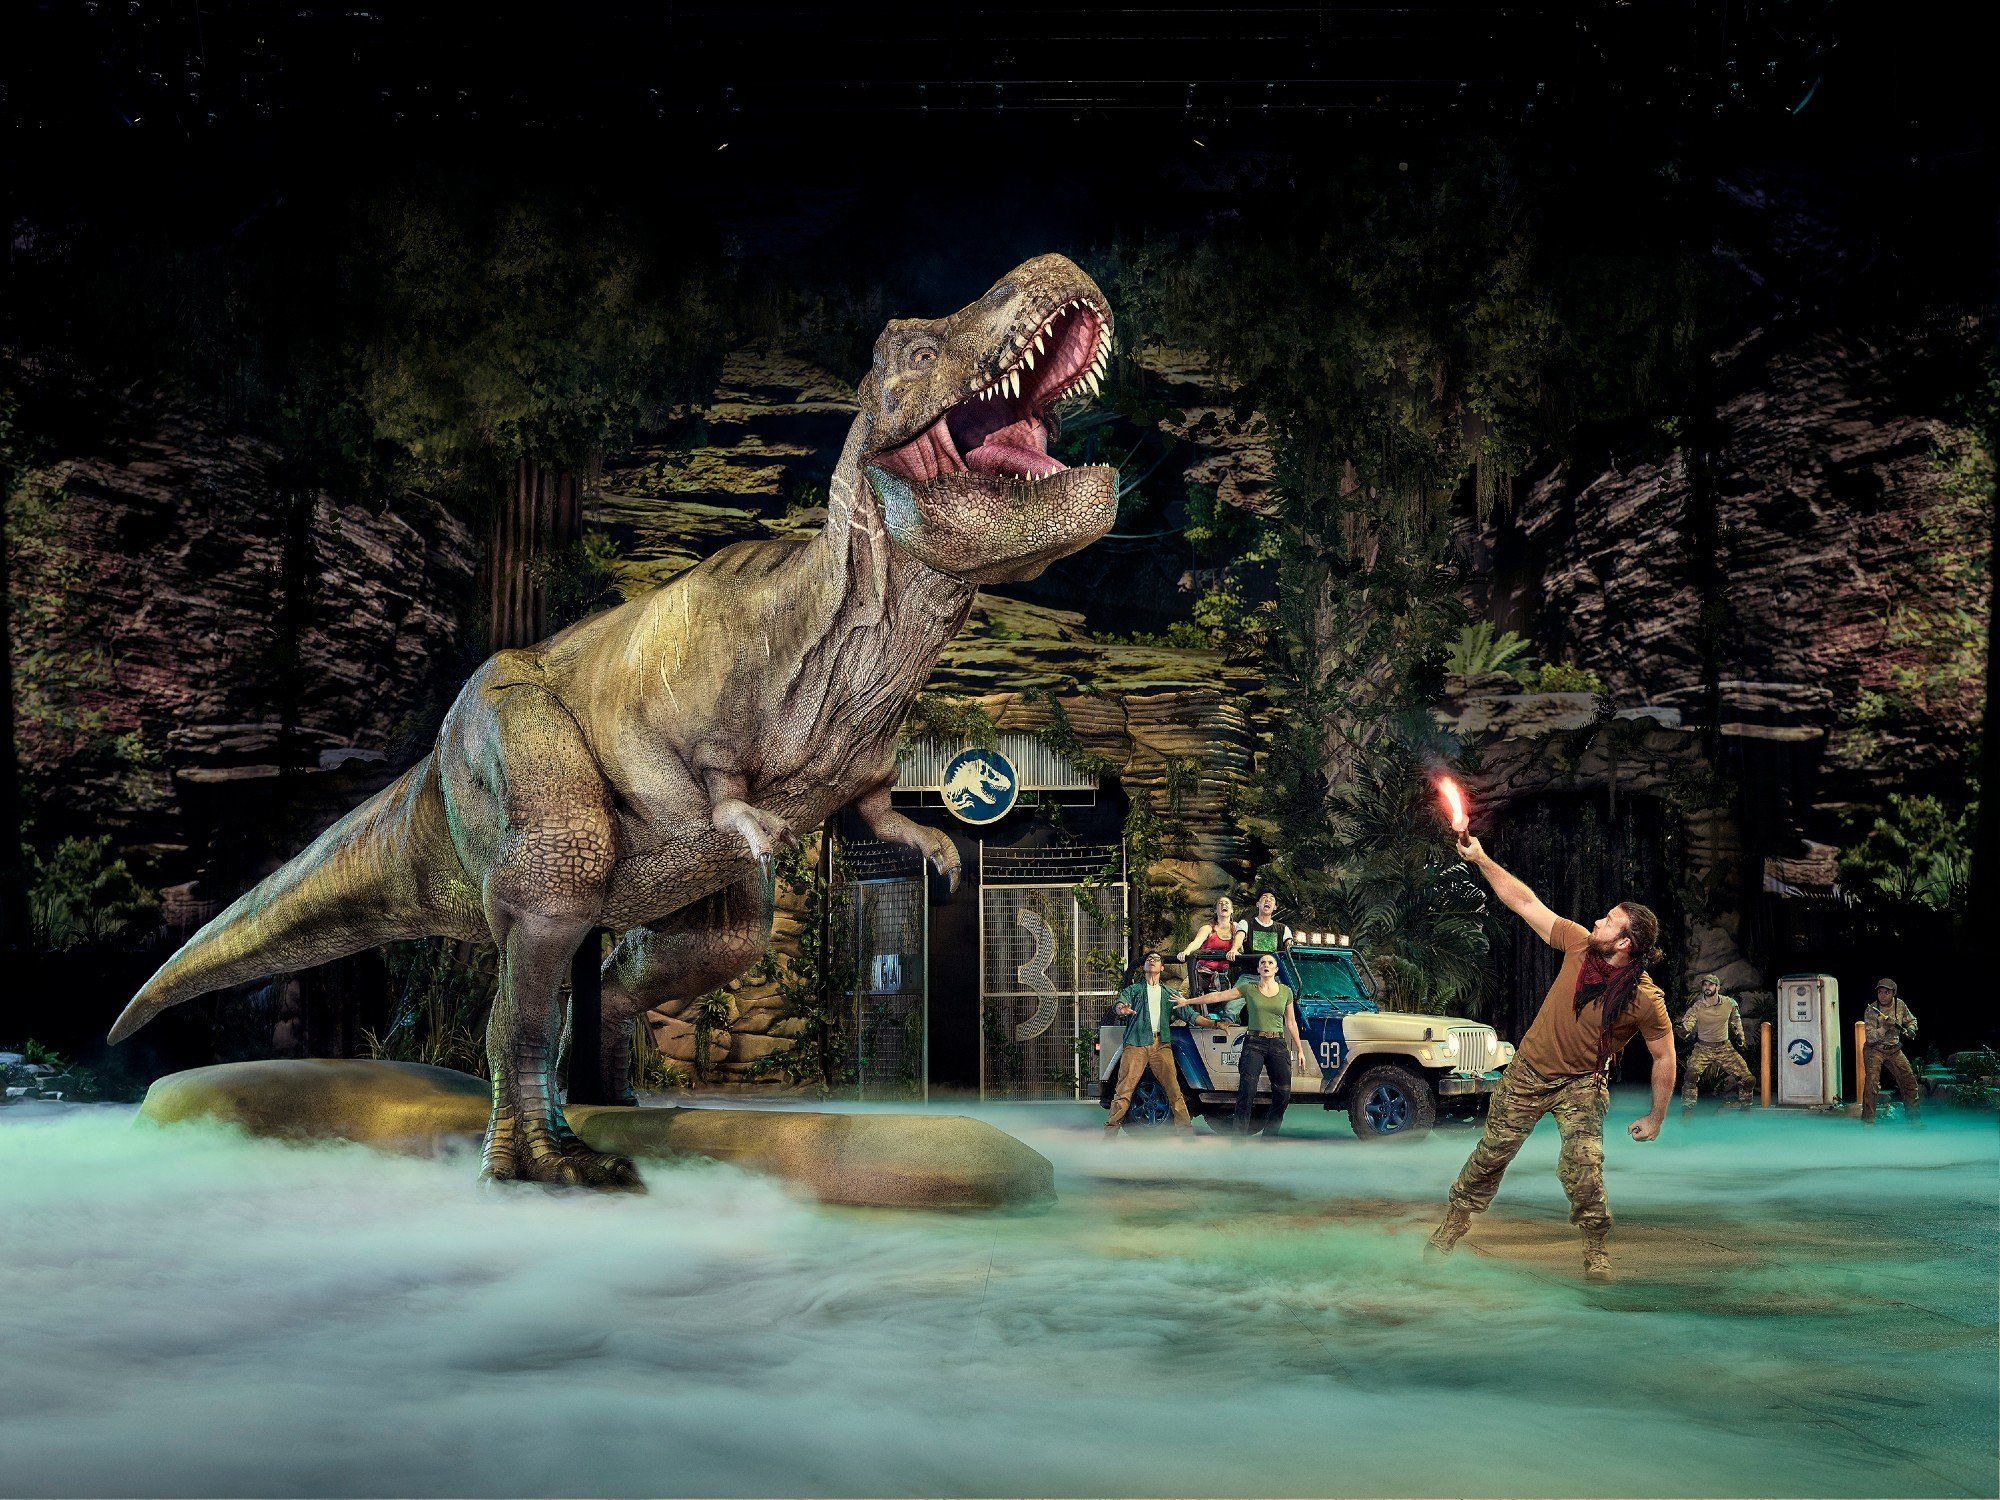 Jurassic World arena experience stomps into Houston for roaring summer dino  fun - CultureMap Houston